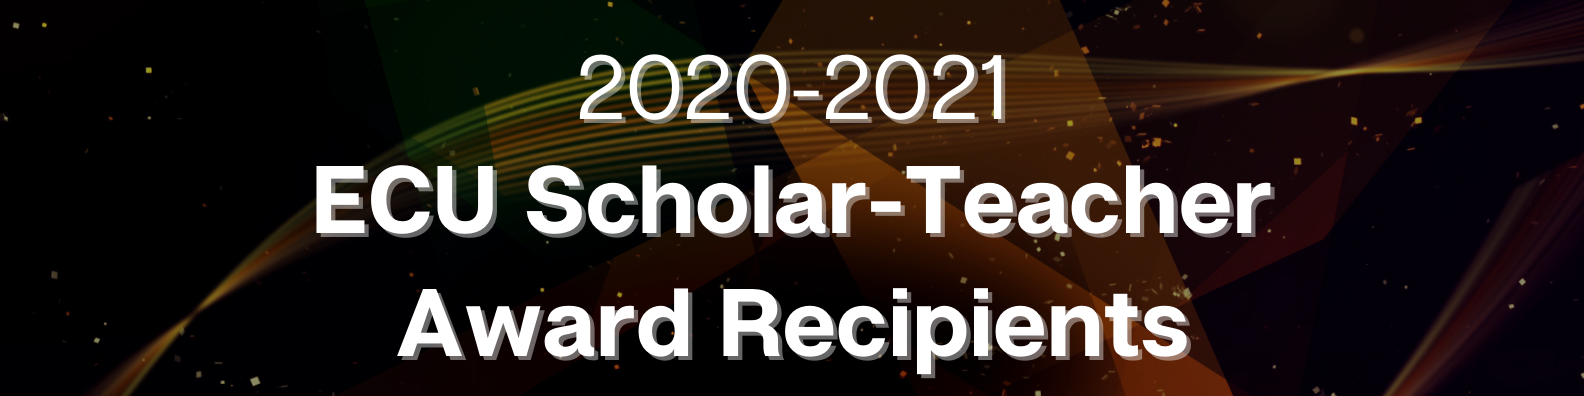 2020-2021 ECU Scholar-Teacher Award Recipients